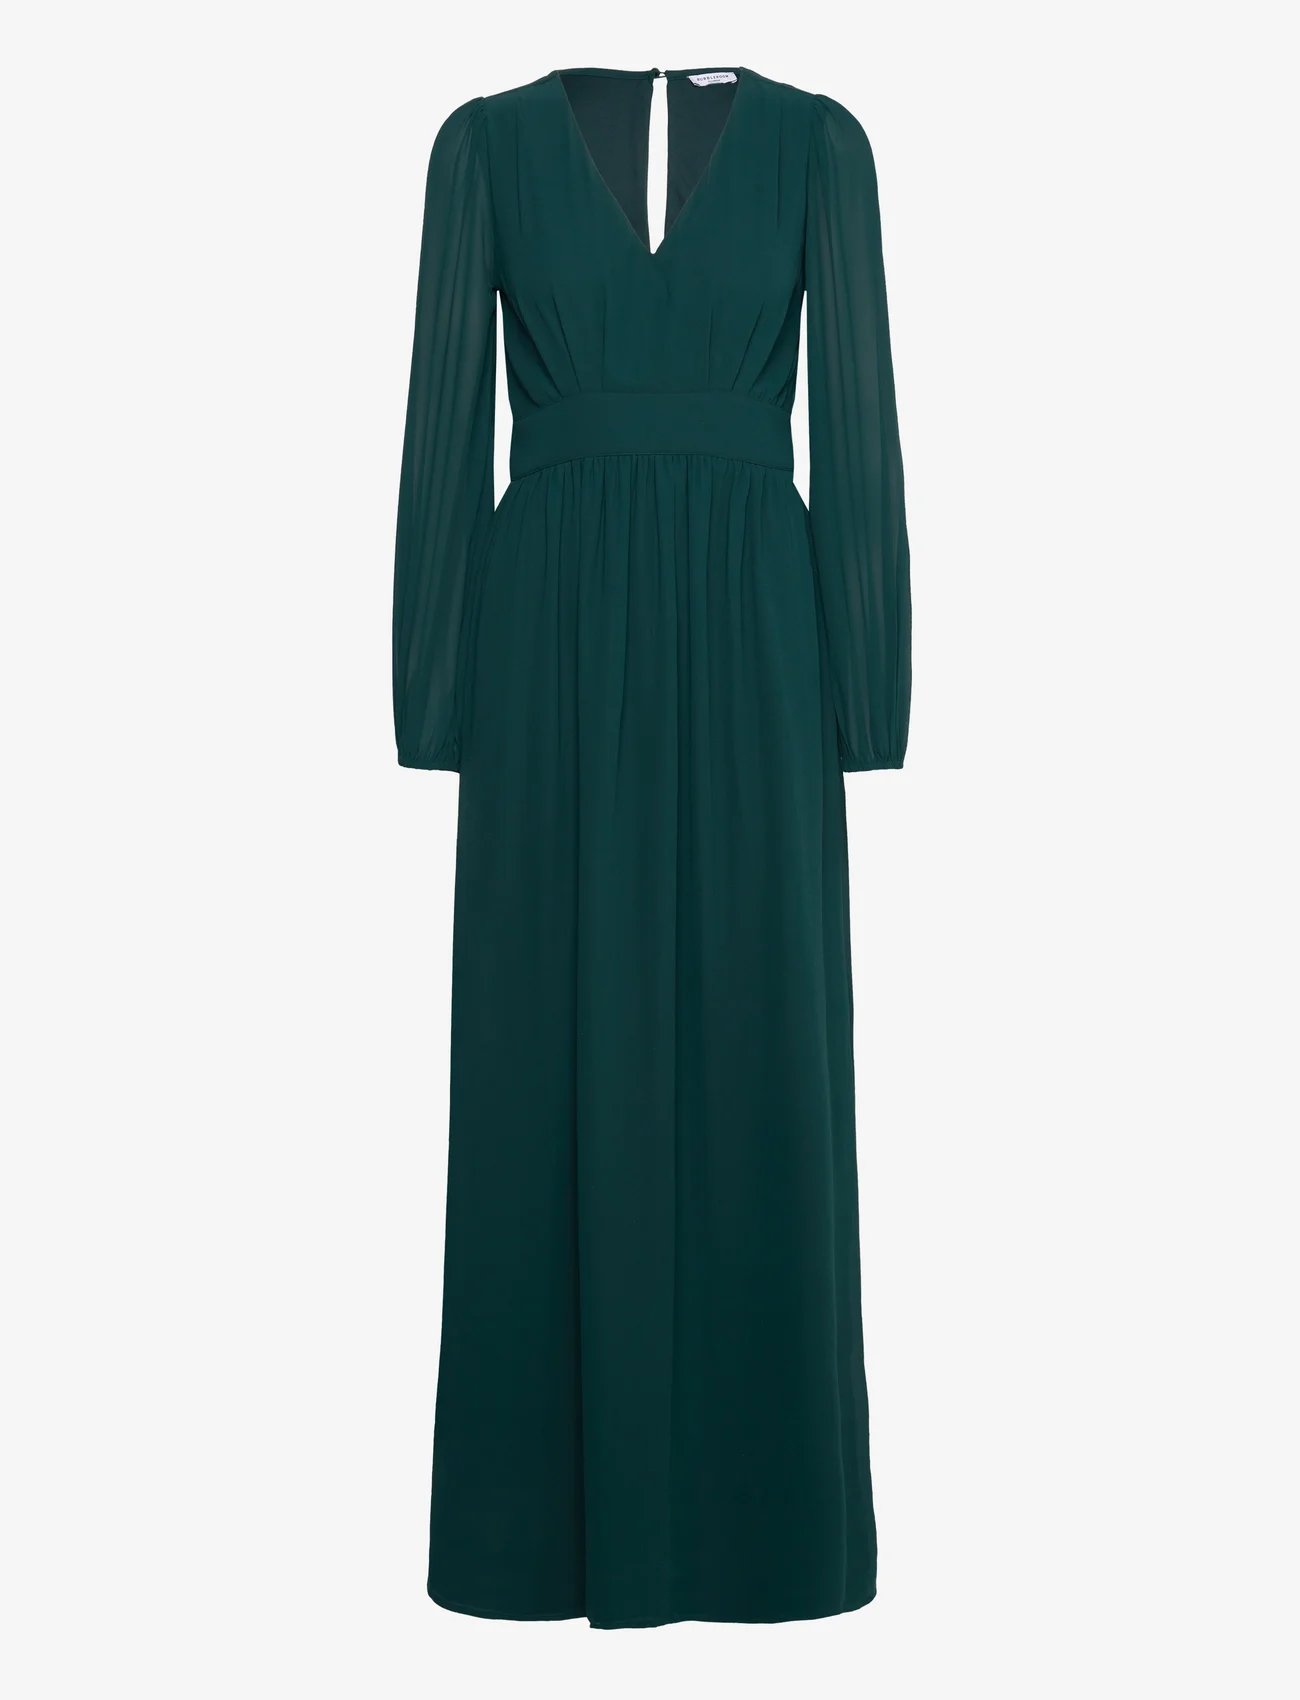 Bubbleroom - Isobel Long sleeve Gown - ballīšu apģērbs par outlet cenām - dark green - 0